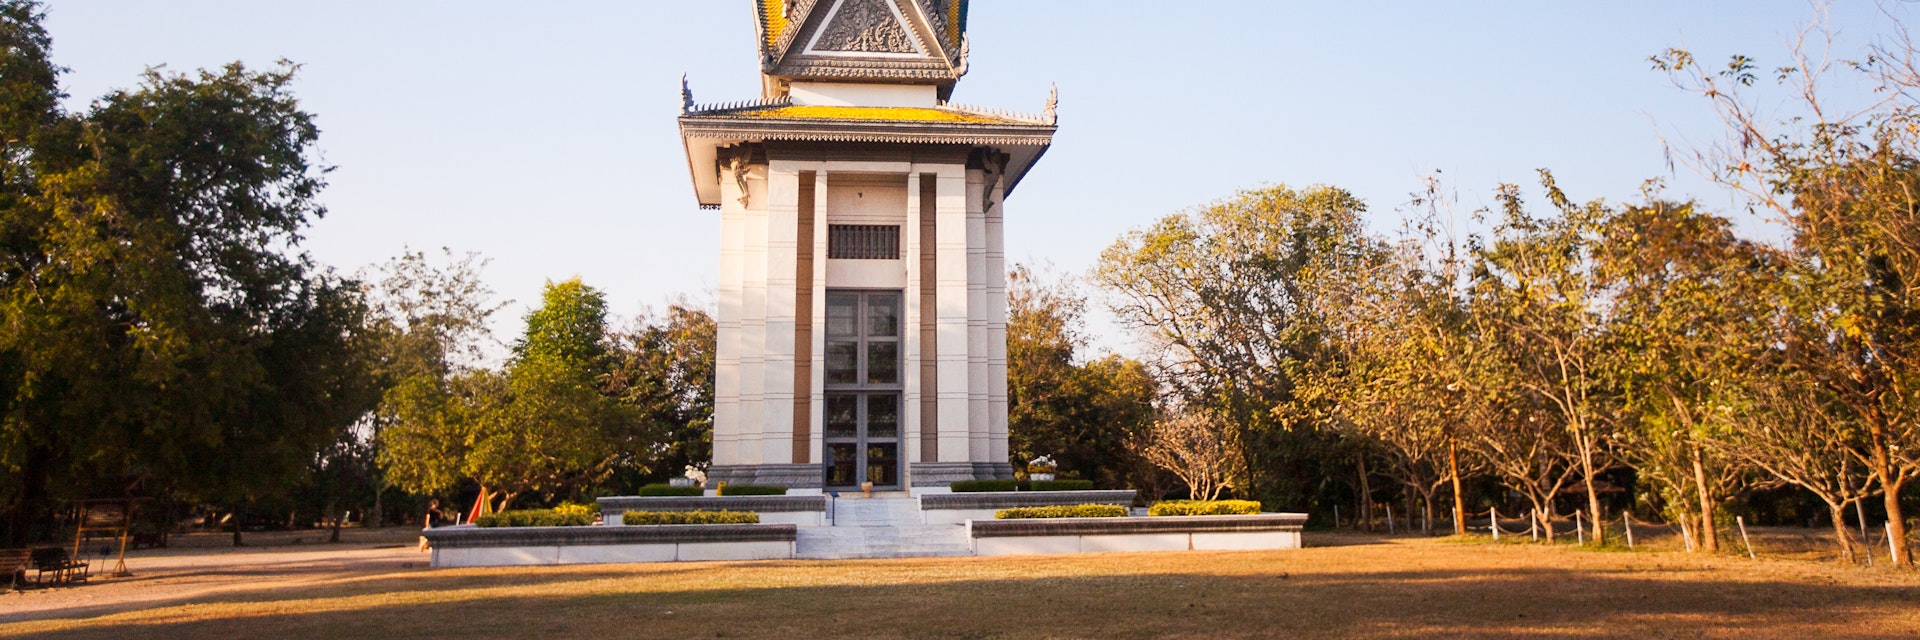 Skull Pagoda at The Killing Fields of Choeung Ek in Phnom Penh, Cambodia.